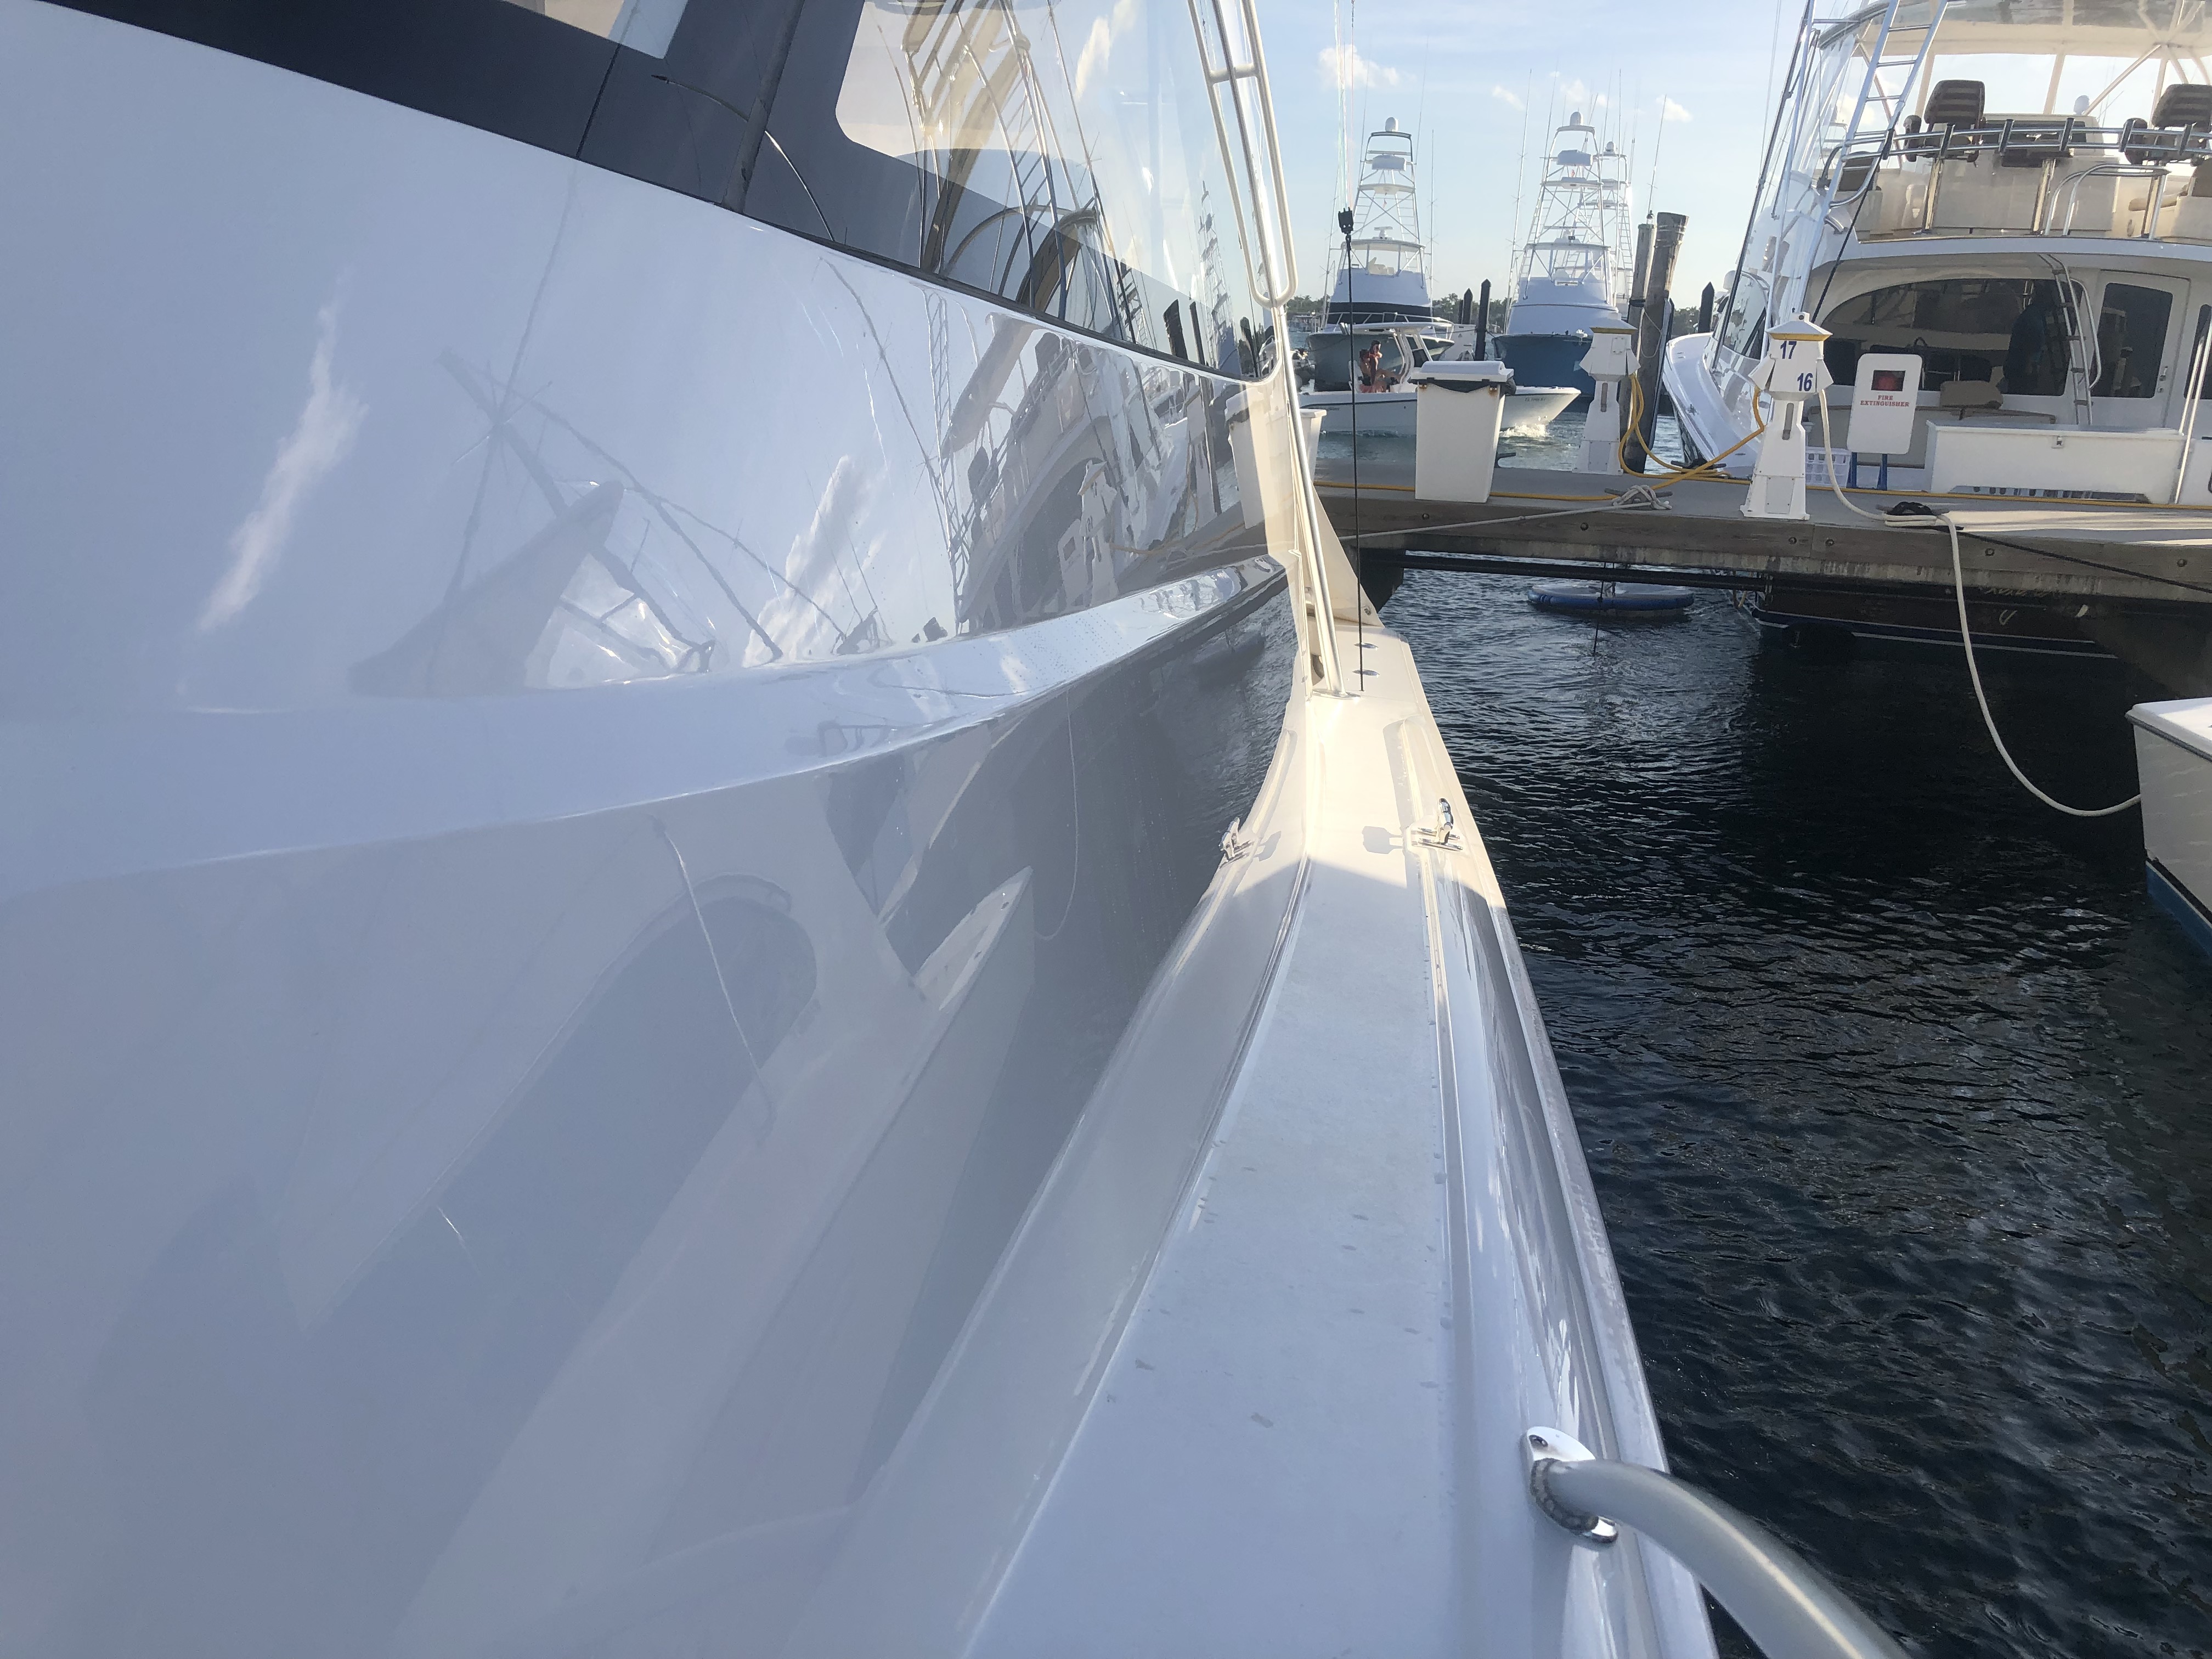 Port side of 52' Viking docked at marina after Glidecoat yacht ceramic coating protection application